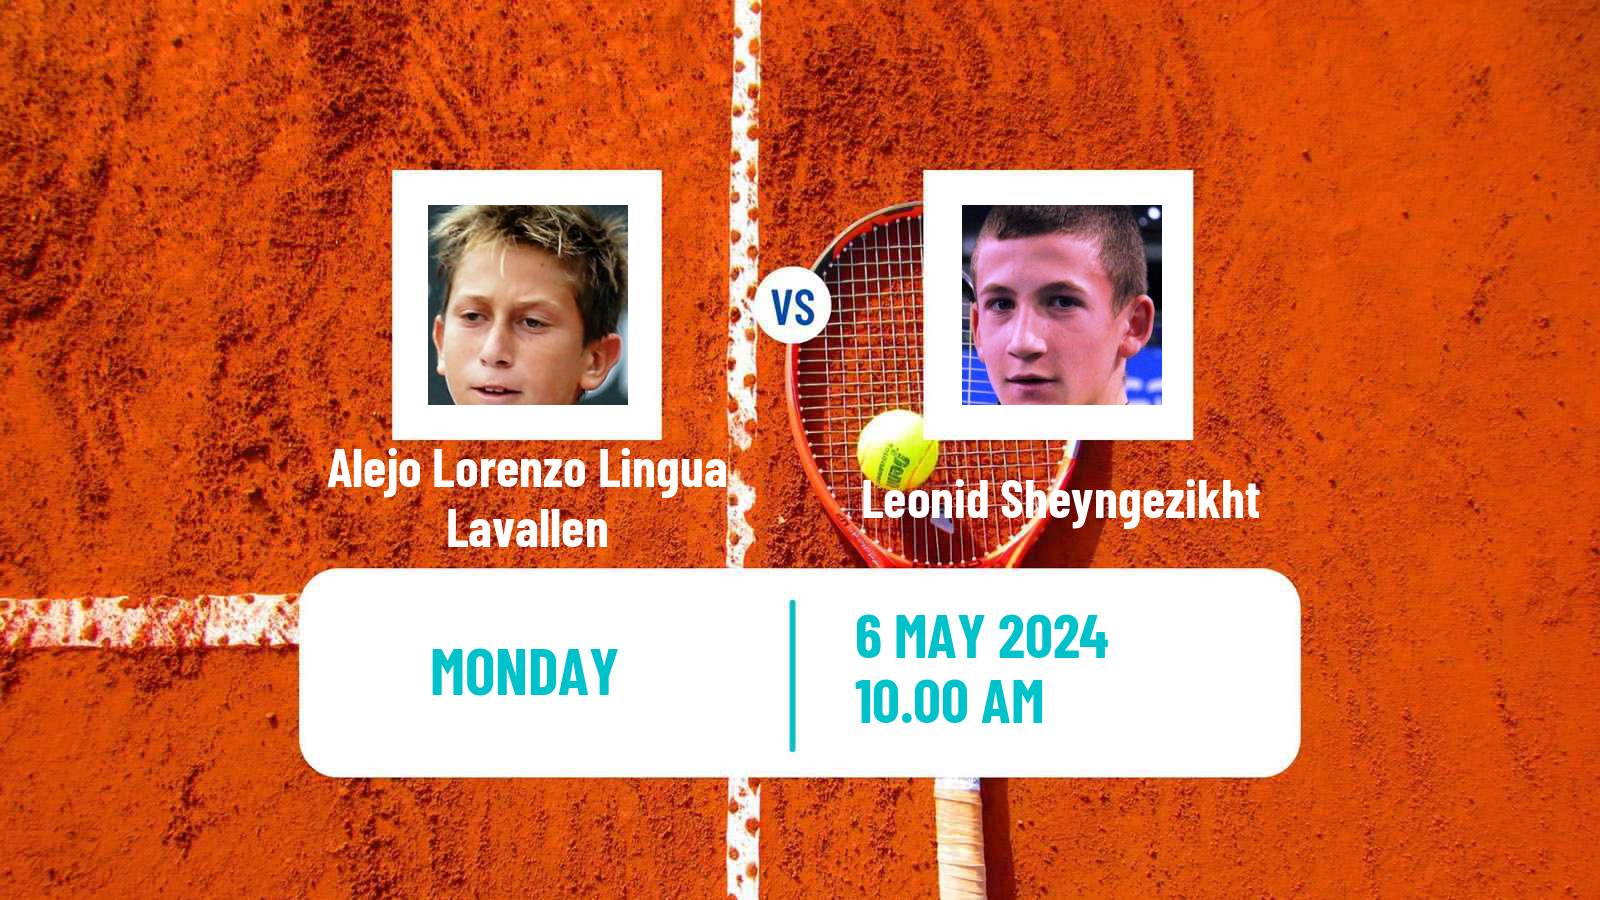 Tennis Santos Challenger Men Alejo Lorenzo Lingua Lavallen - Leonid Sheyngezikht